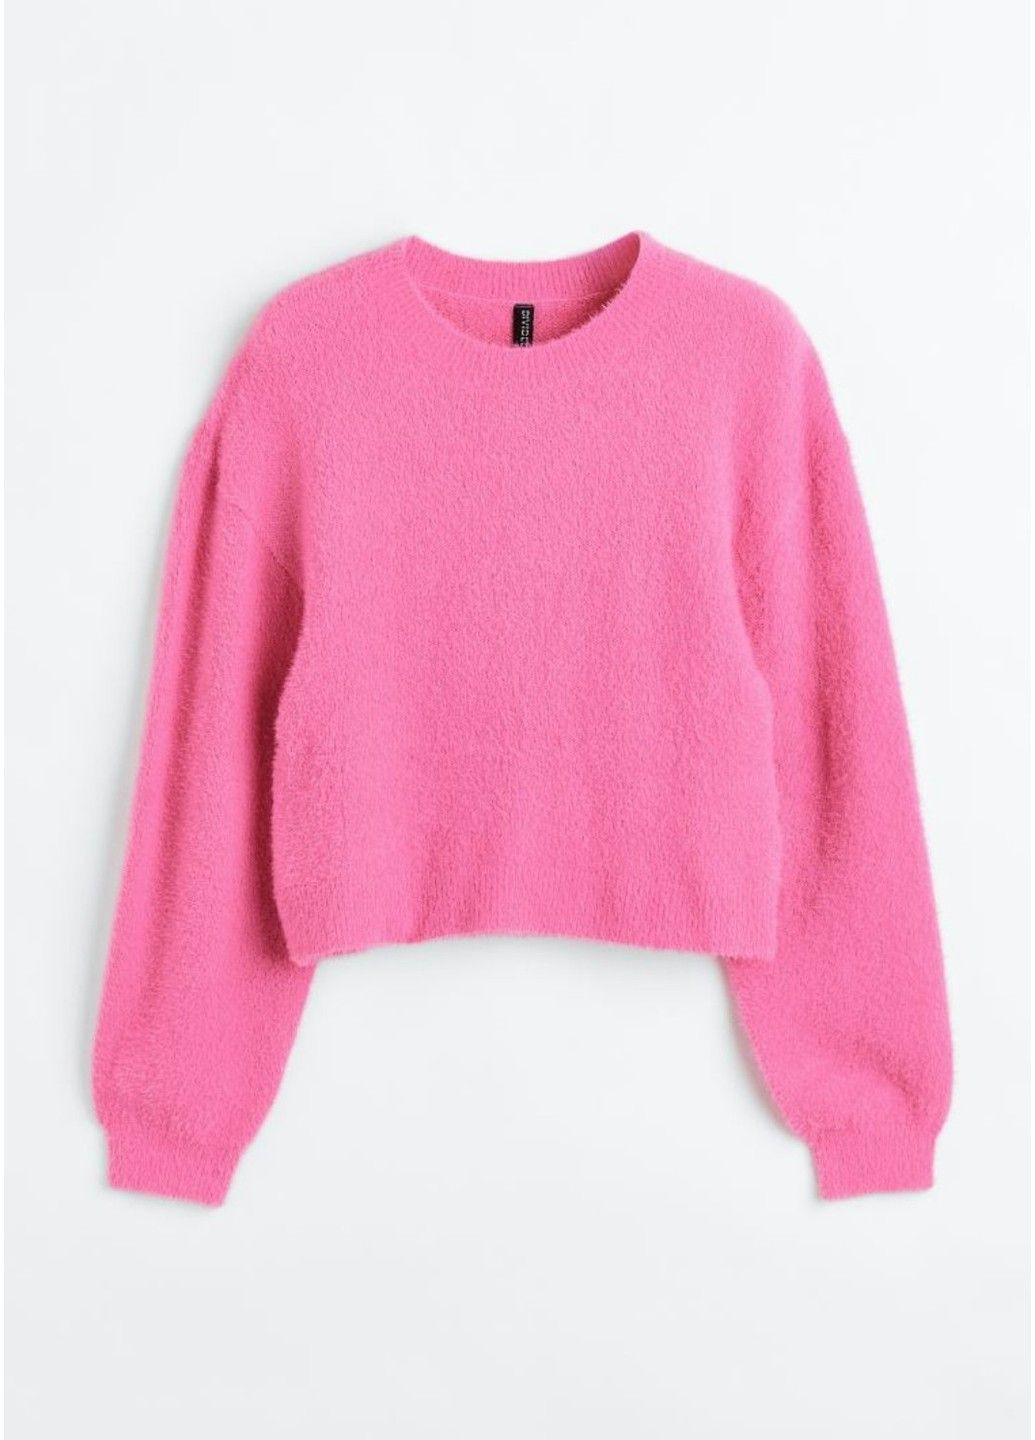 Розовый зимний женский свитер н&м (56620) xs розовый H&M